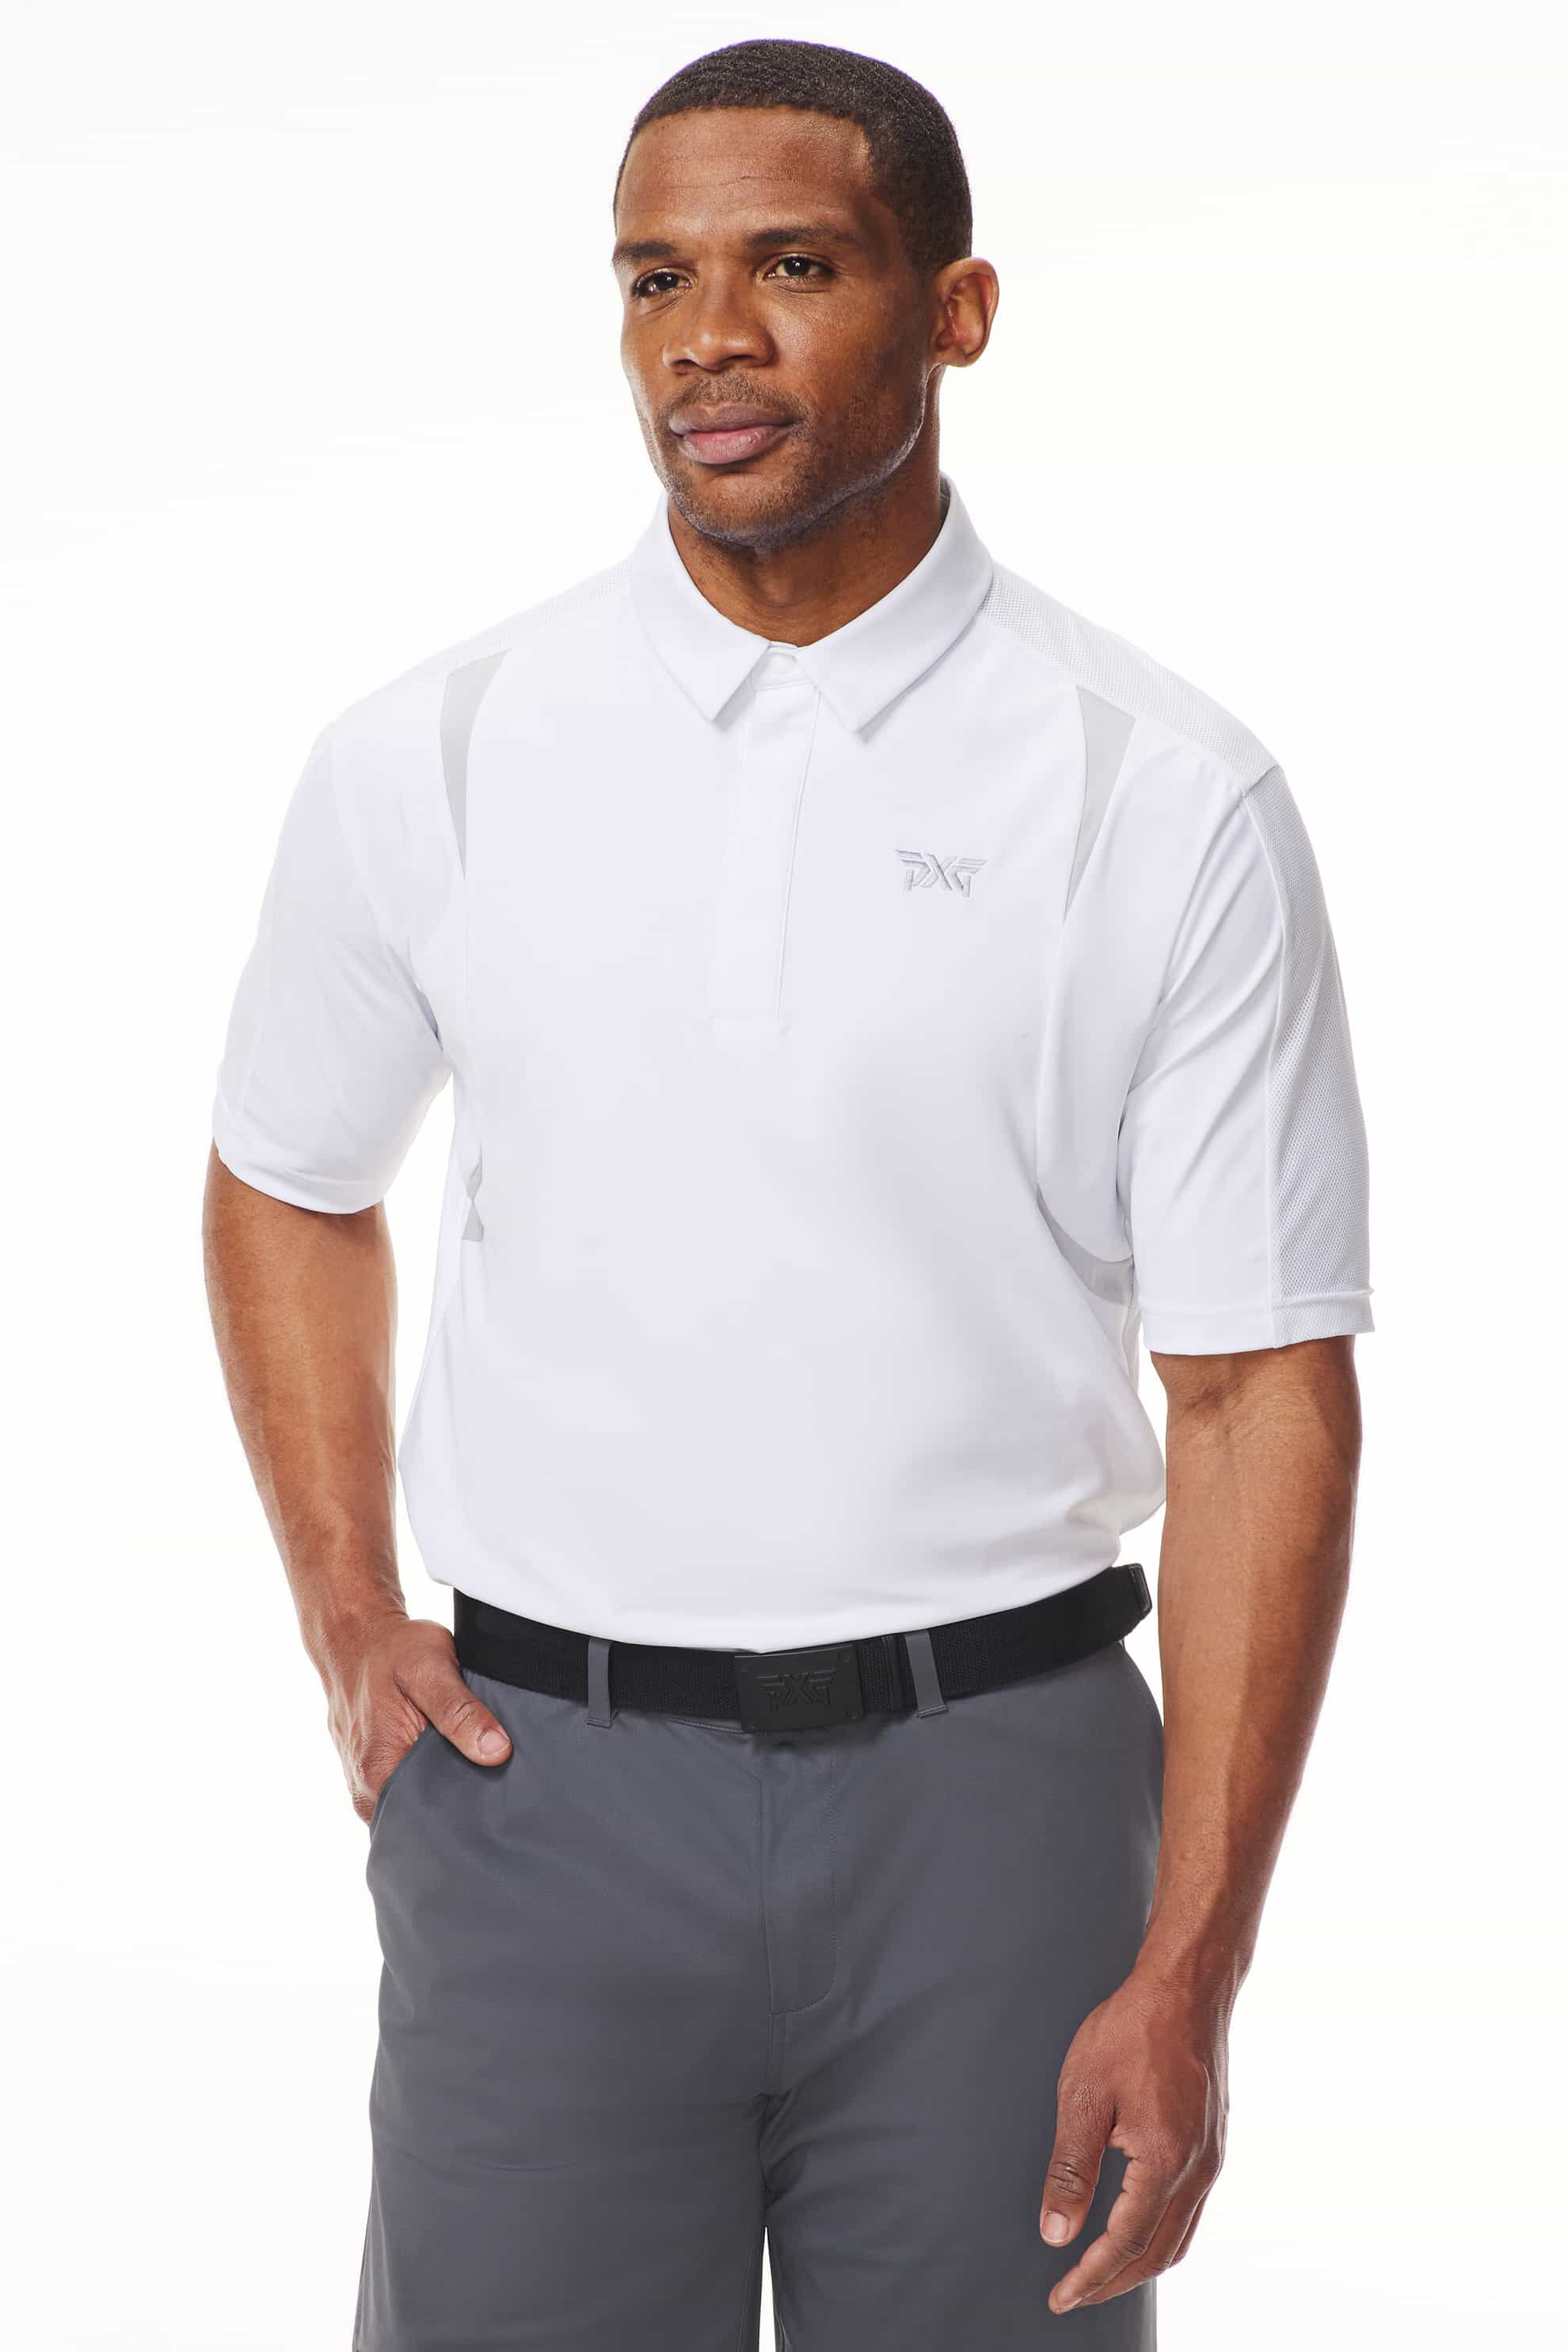 Shop Men's Golf ポロシャツ - Comfort and Athletic Fit | PXG JP